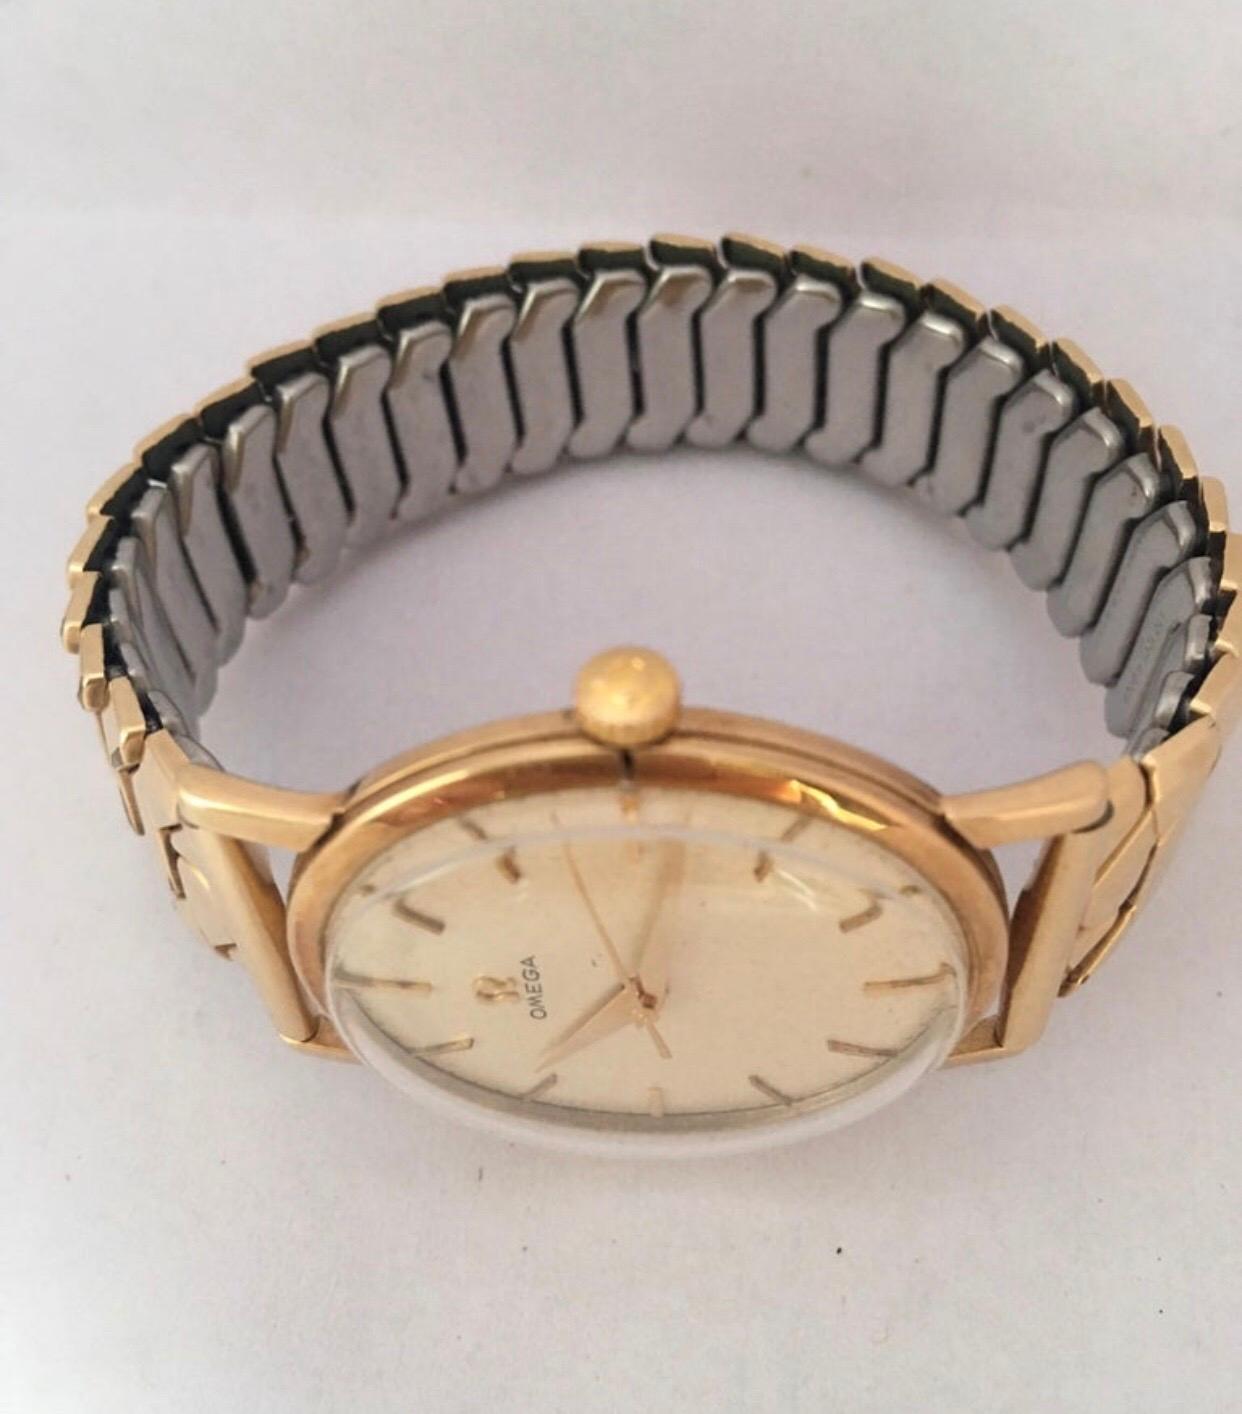 9 Karat Gold and Rolled Gold Bracelet 1960s Omega Mechanical Watch For Sale 1